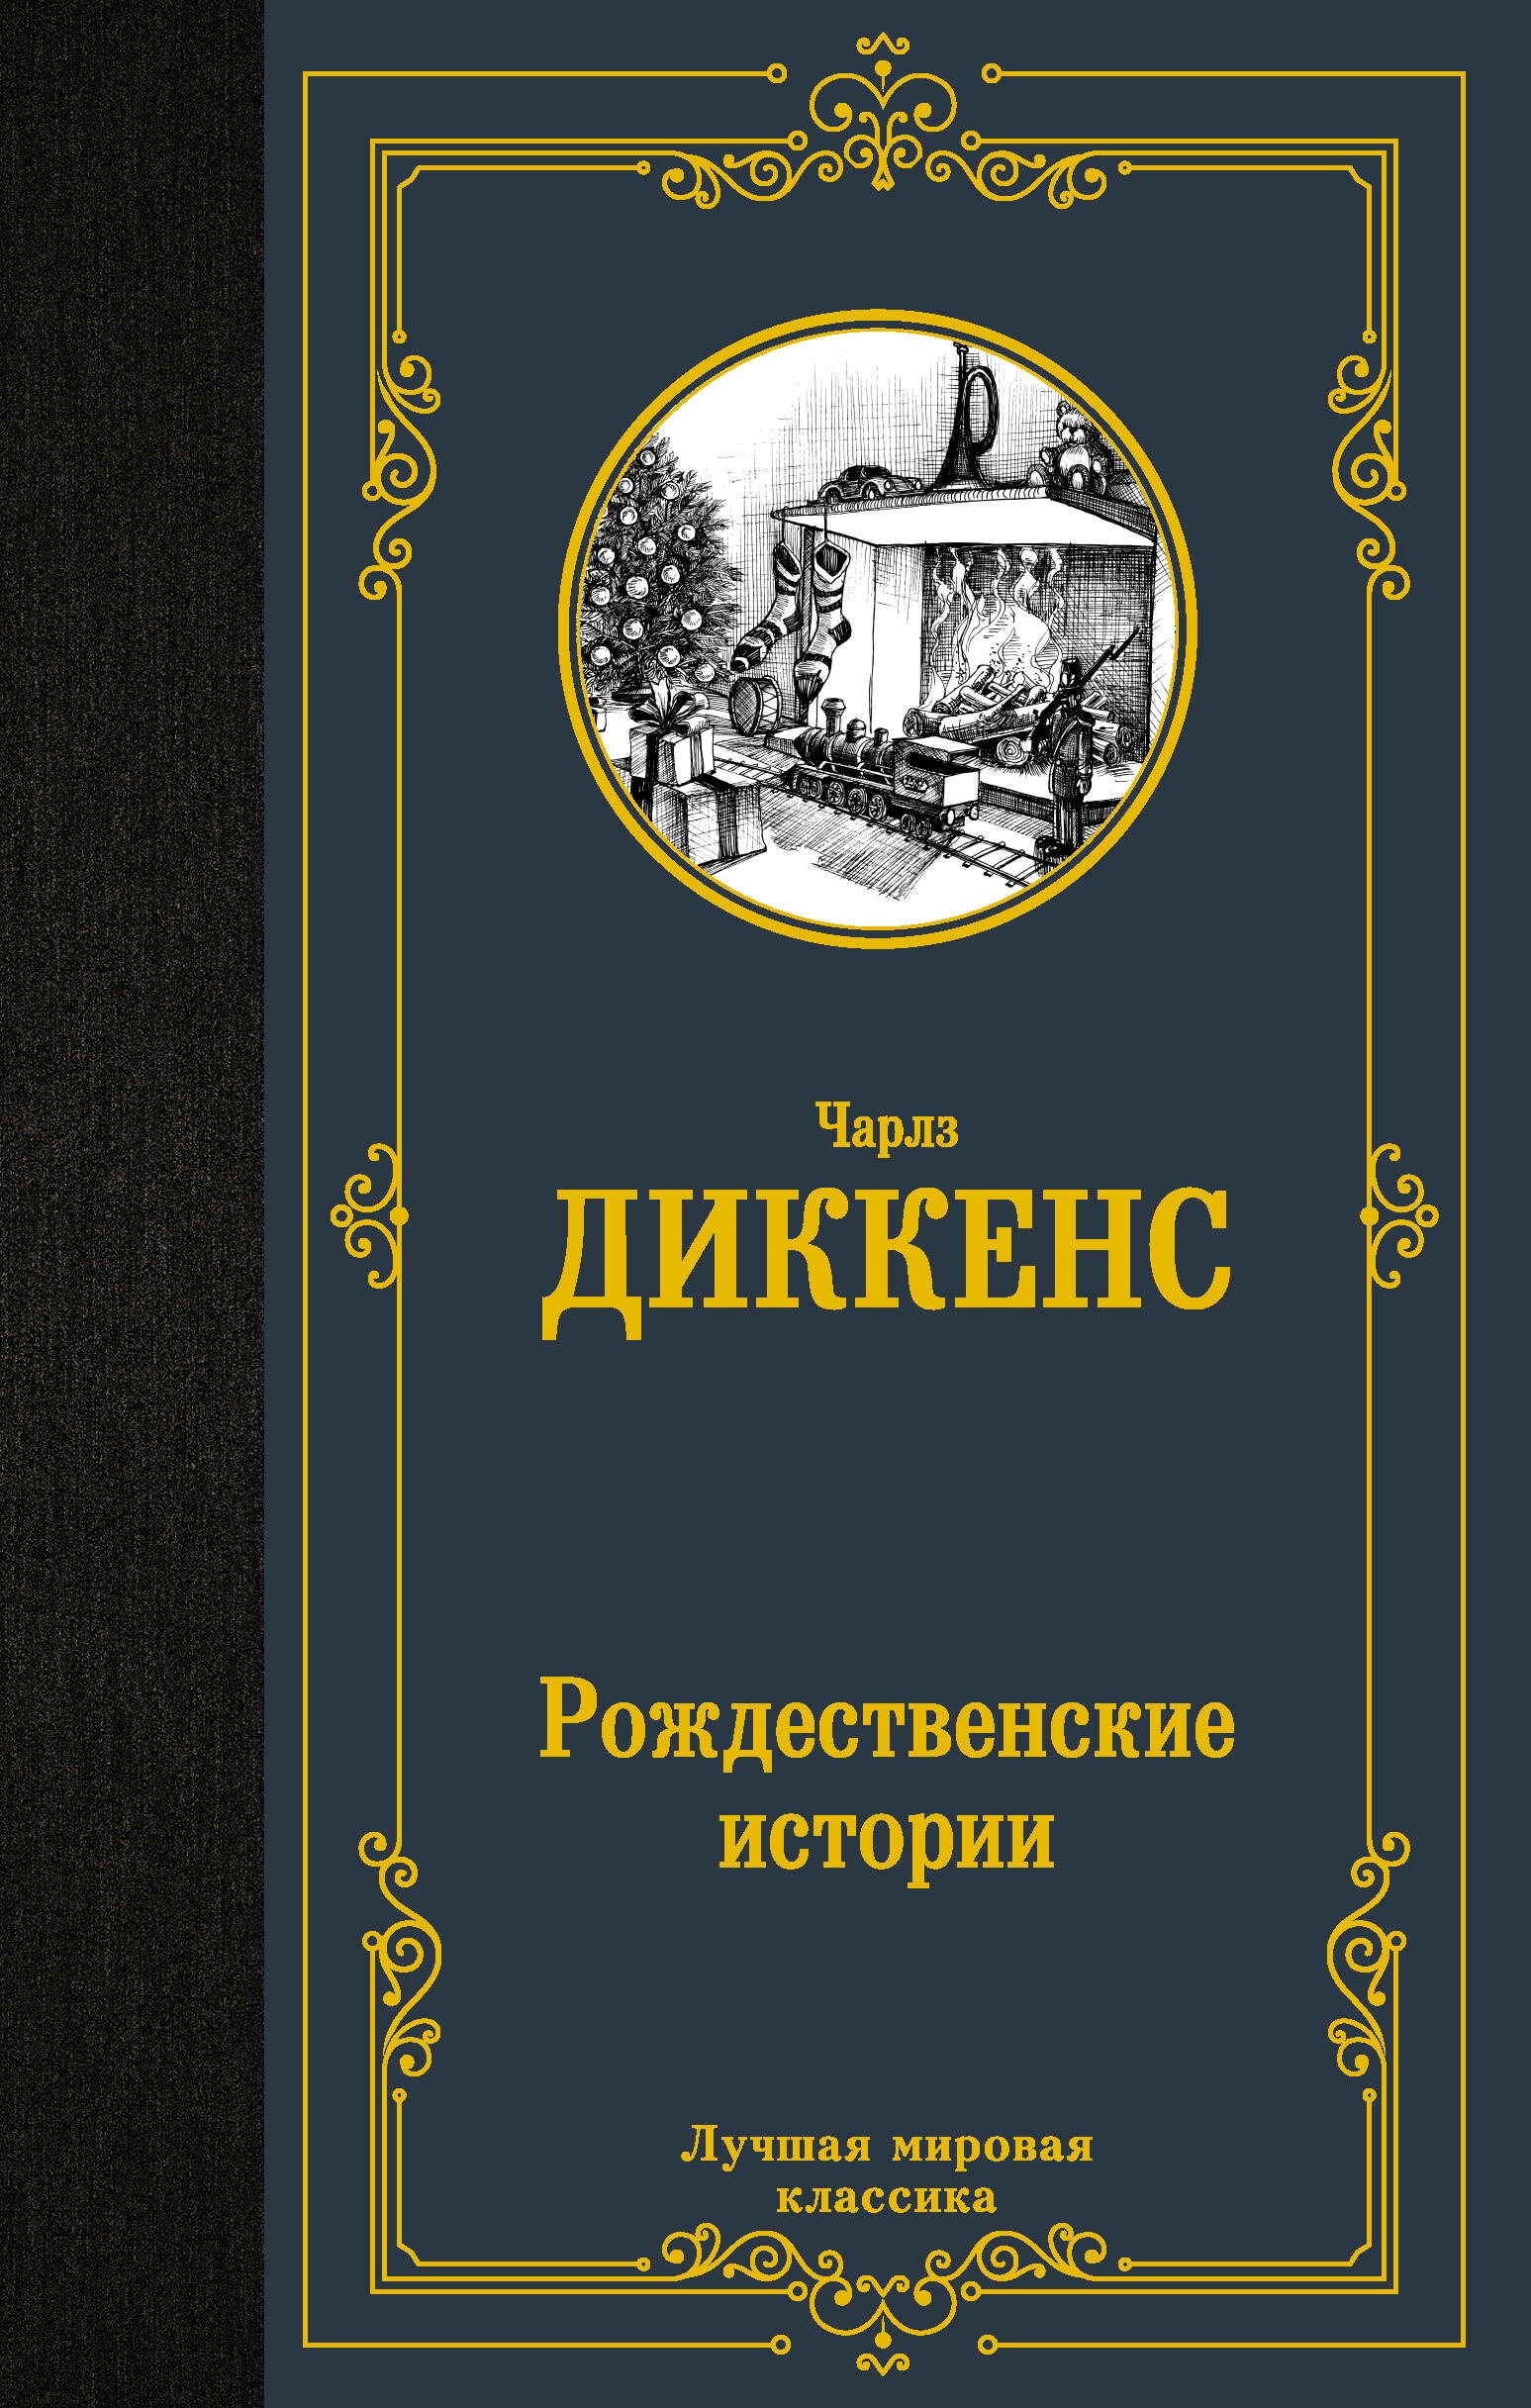 Book “Рождественские истории” by Чарльз Диккенс — 2023